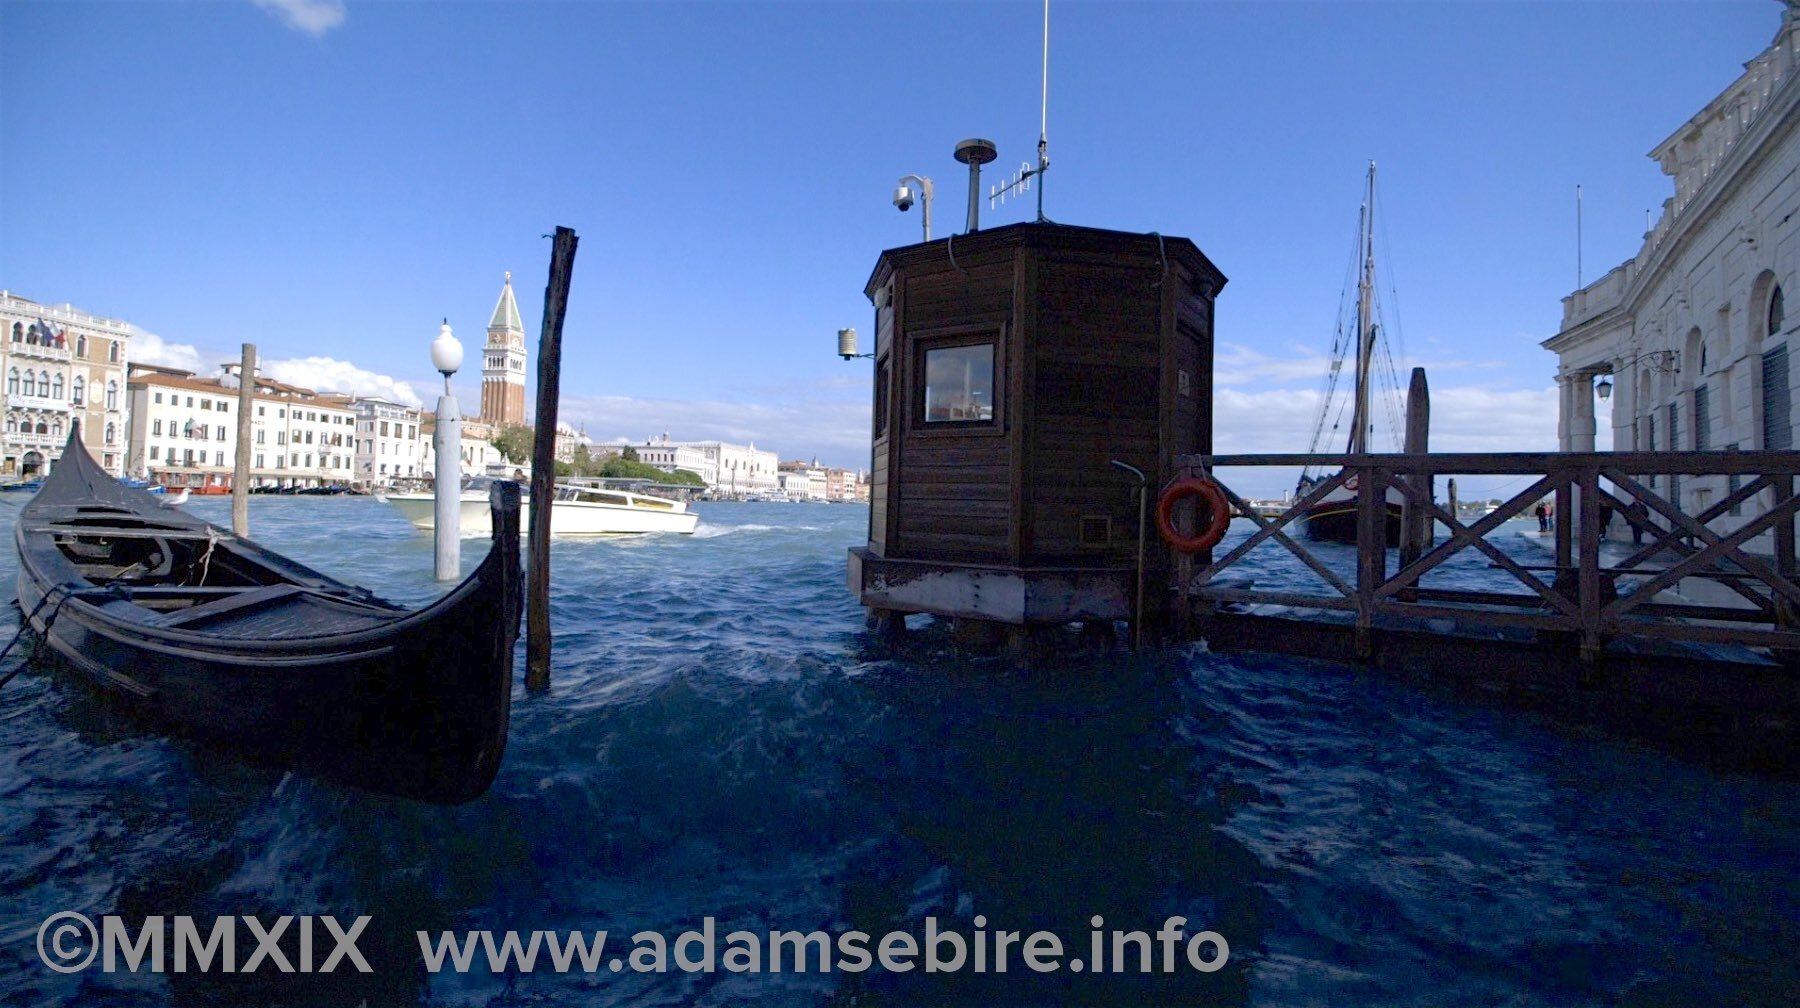 Venice acqua alta flooding - official tide gauge measurement.jpg